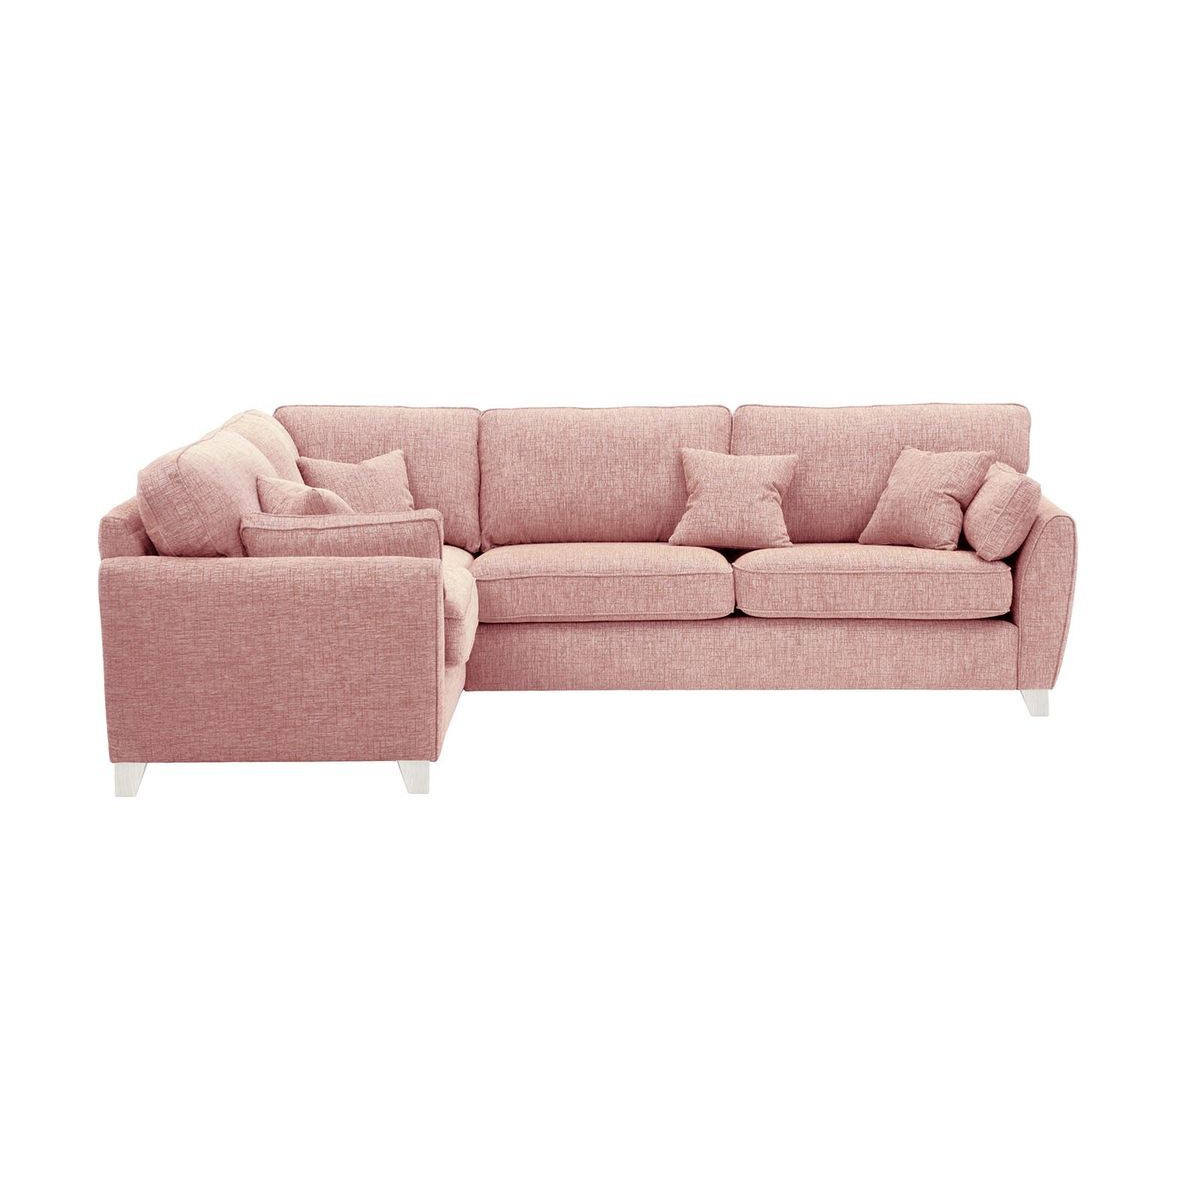 James Large Left Corner Sofa, blush pink, Leg colour: white - image 1